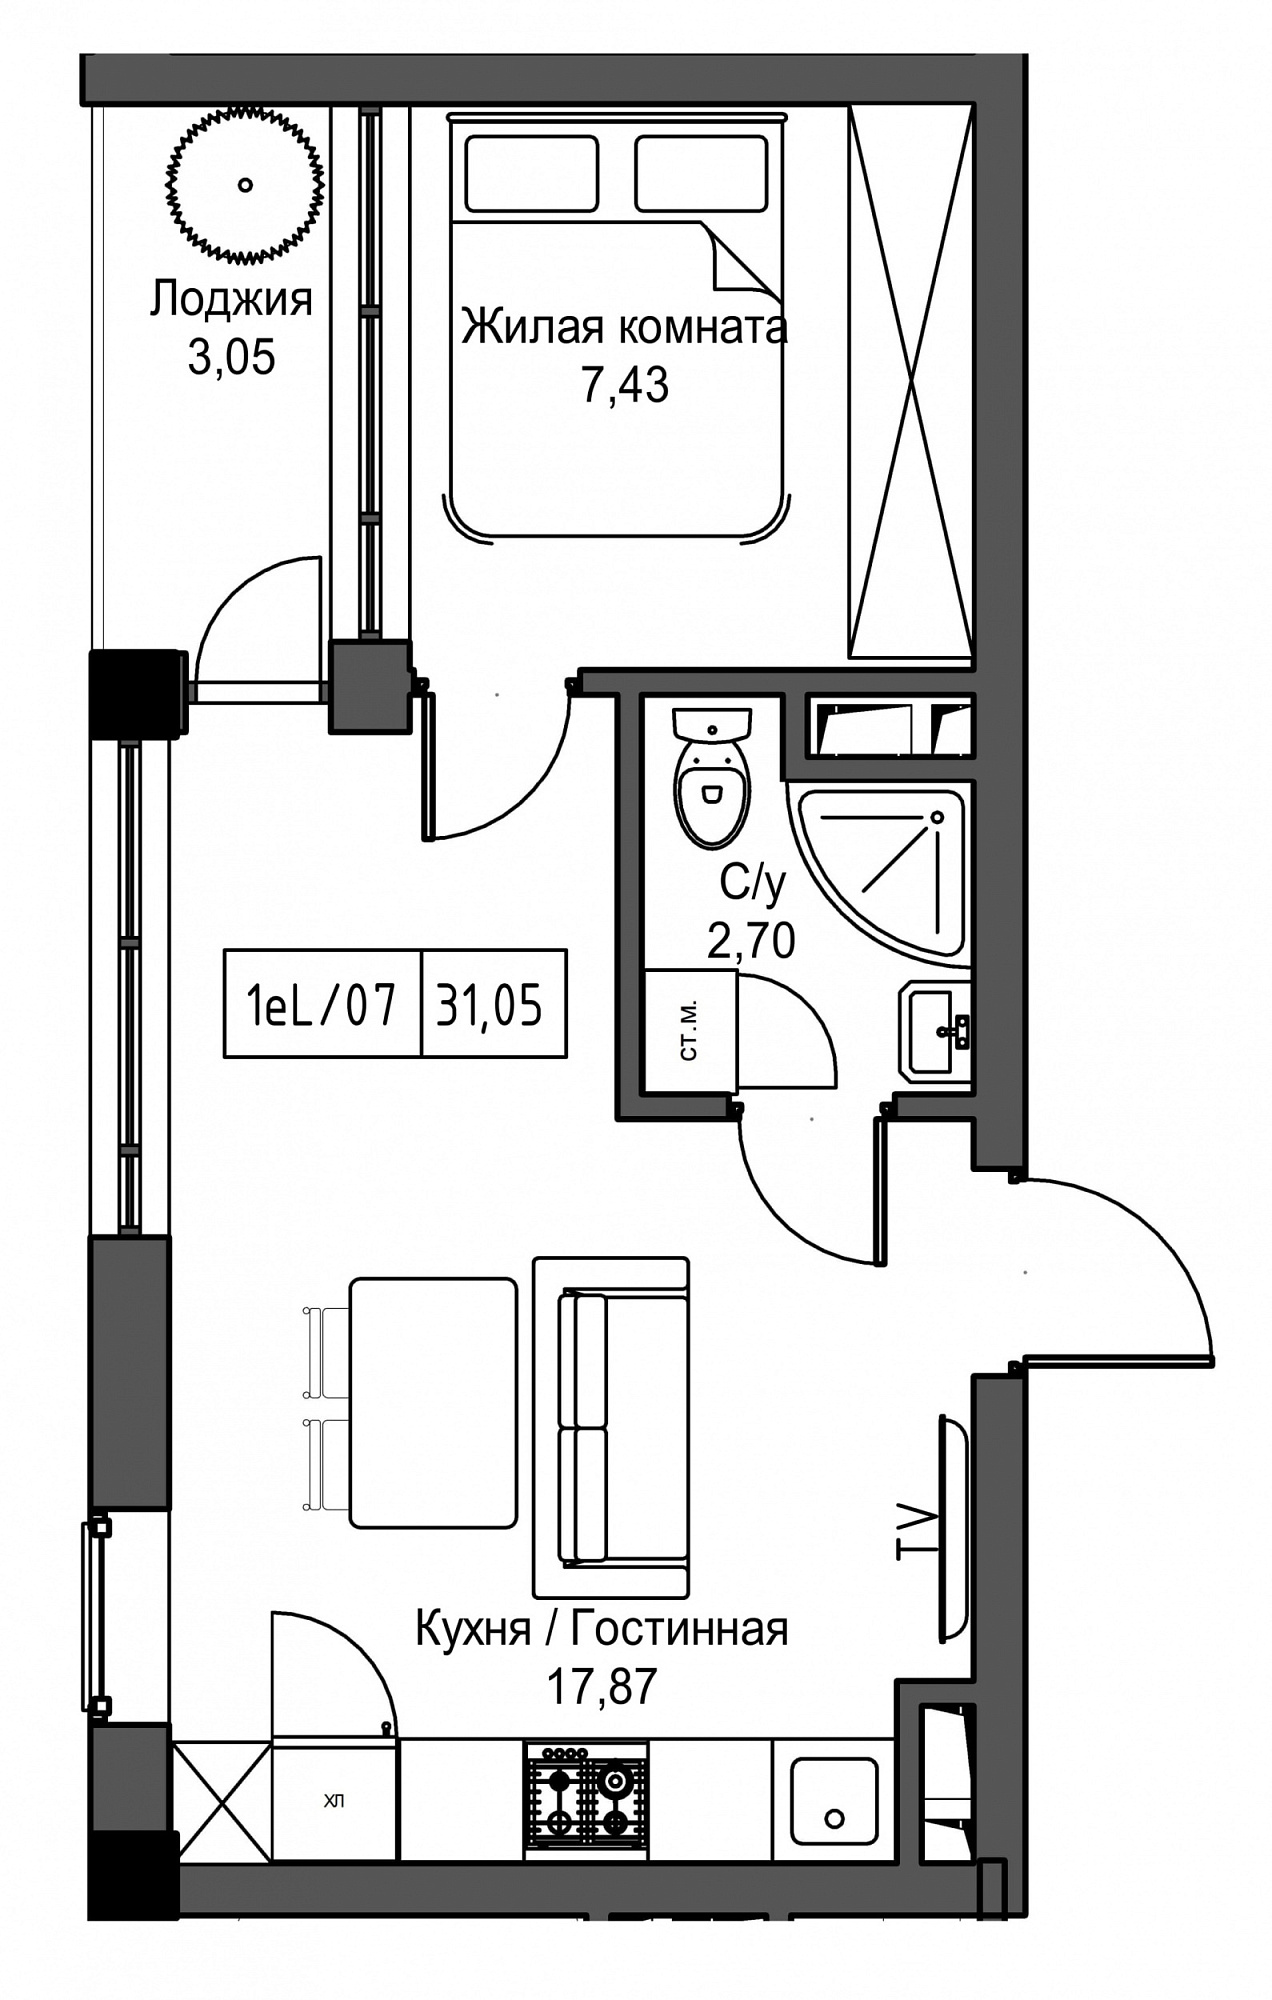 Планування 1-к квартира площею 31.05м2, UM-002-09/0087.